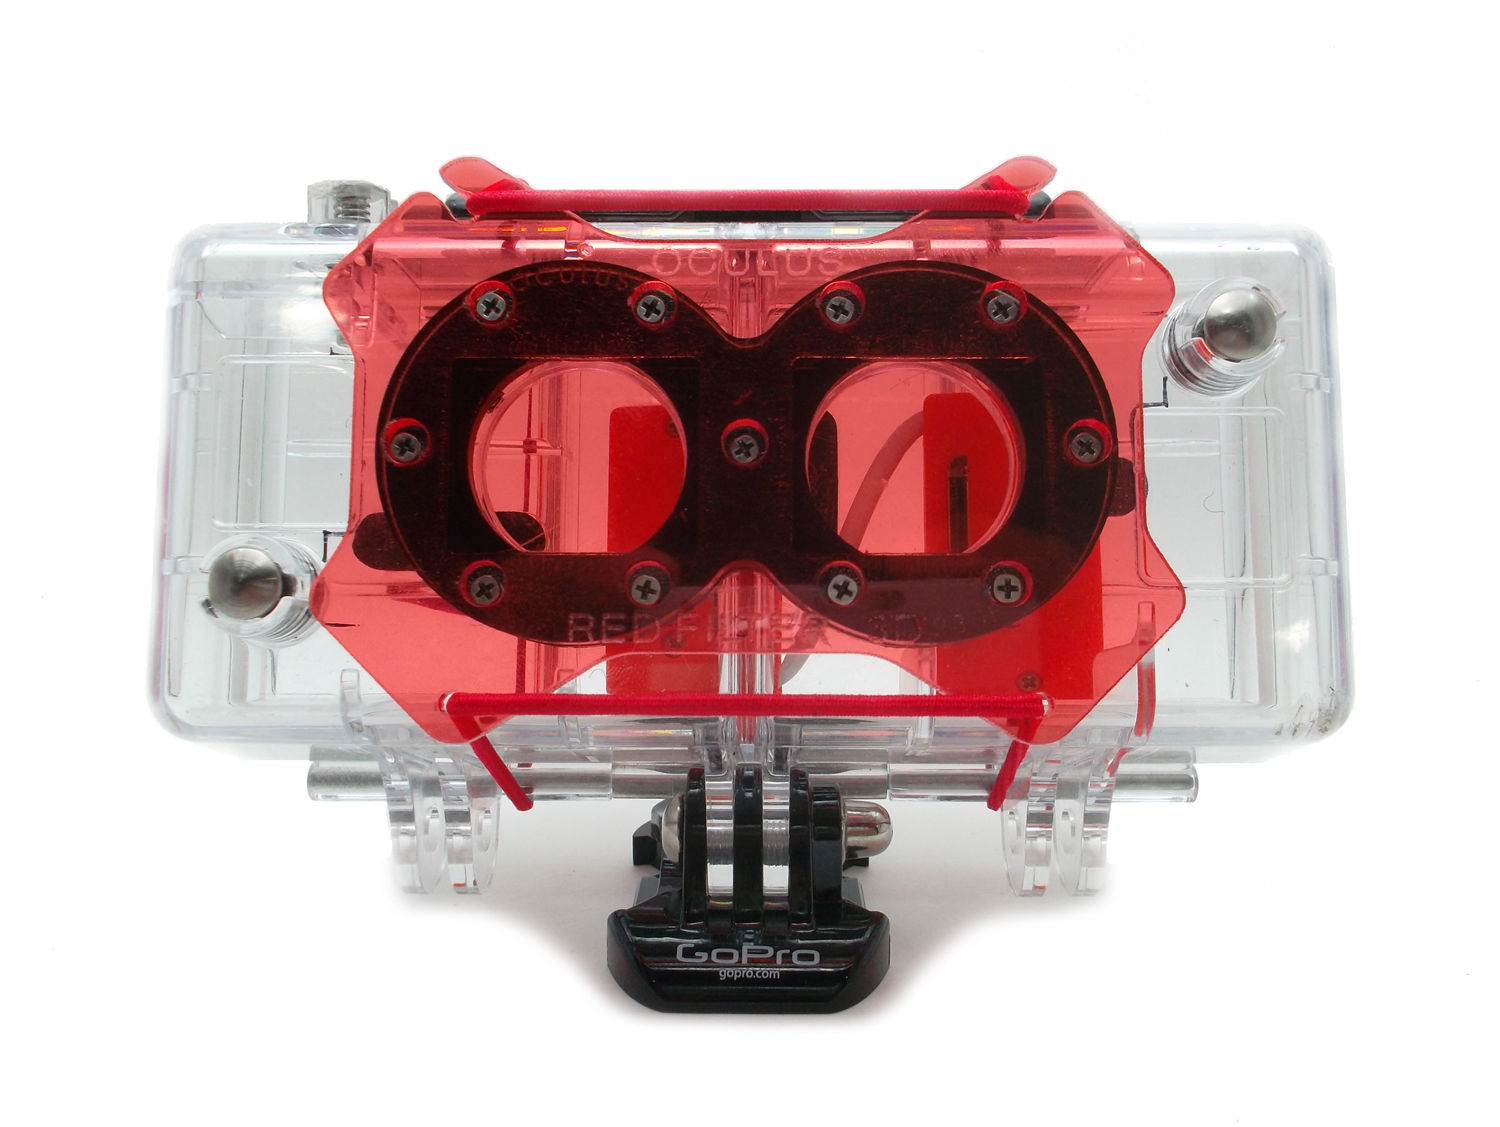 3D RED FILTER FOR GOPRO UNDERWATER CASE OCULUS 3-D